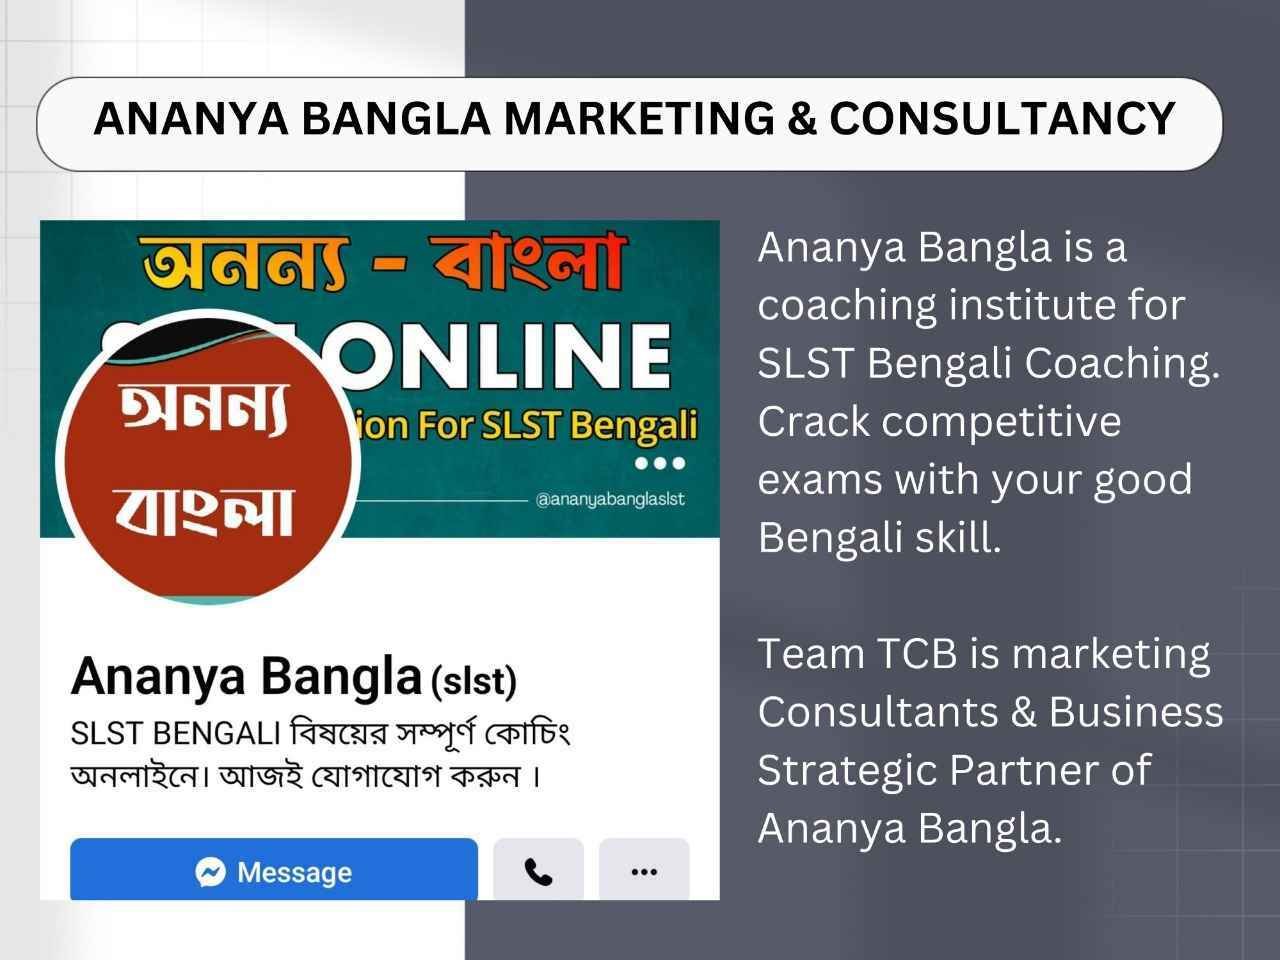 Ananya Bangla Marketing & Consultancy - Team TCB